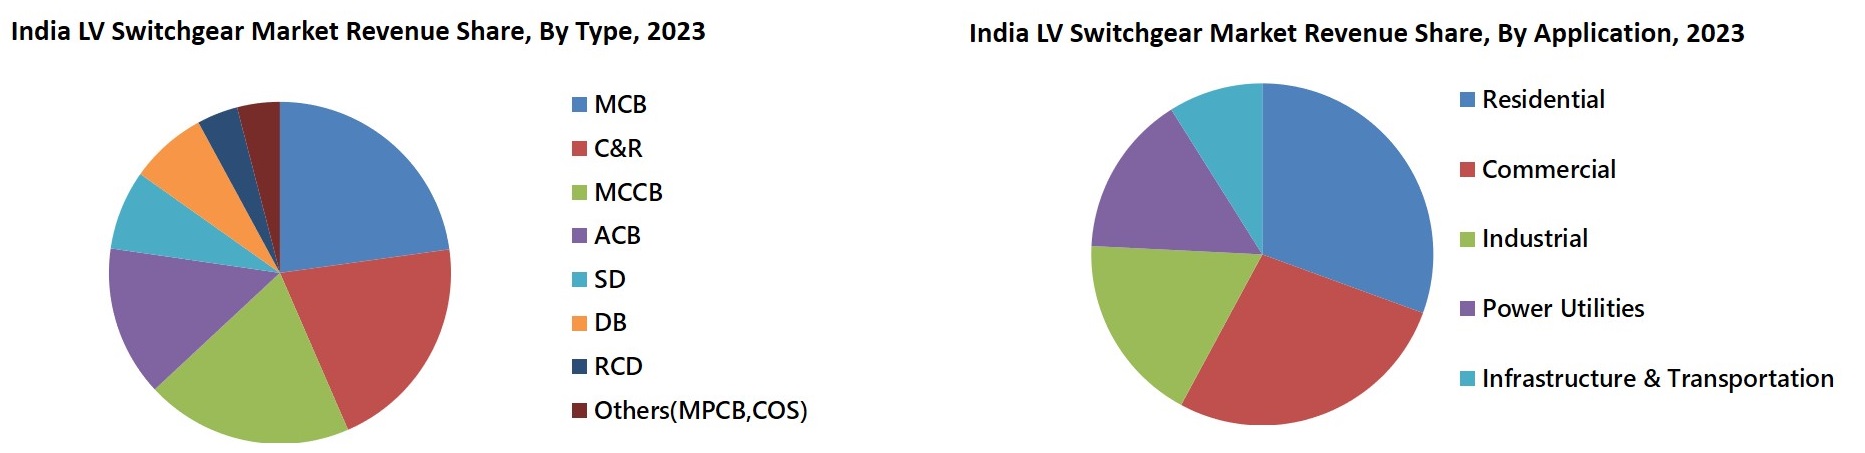 India LV Switchgear Market